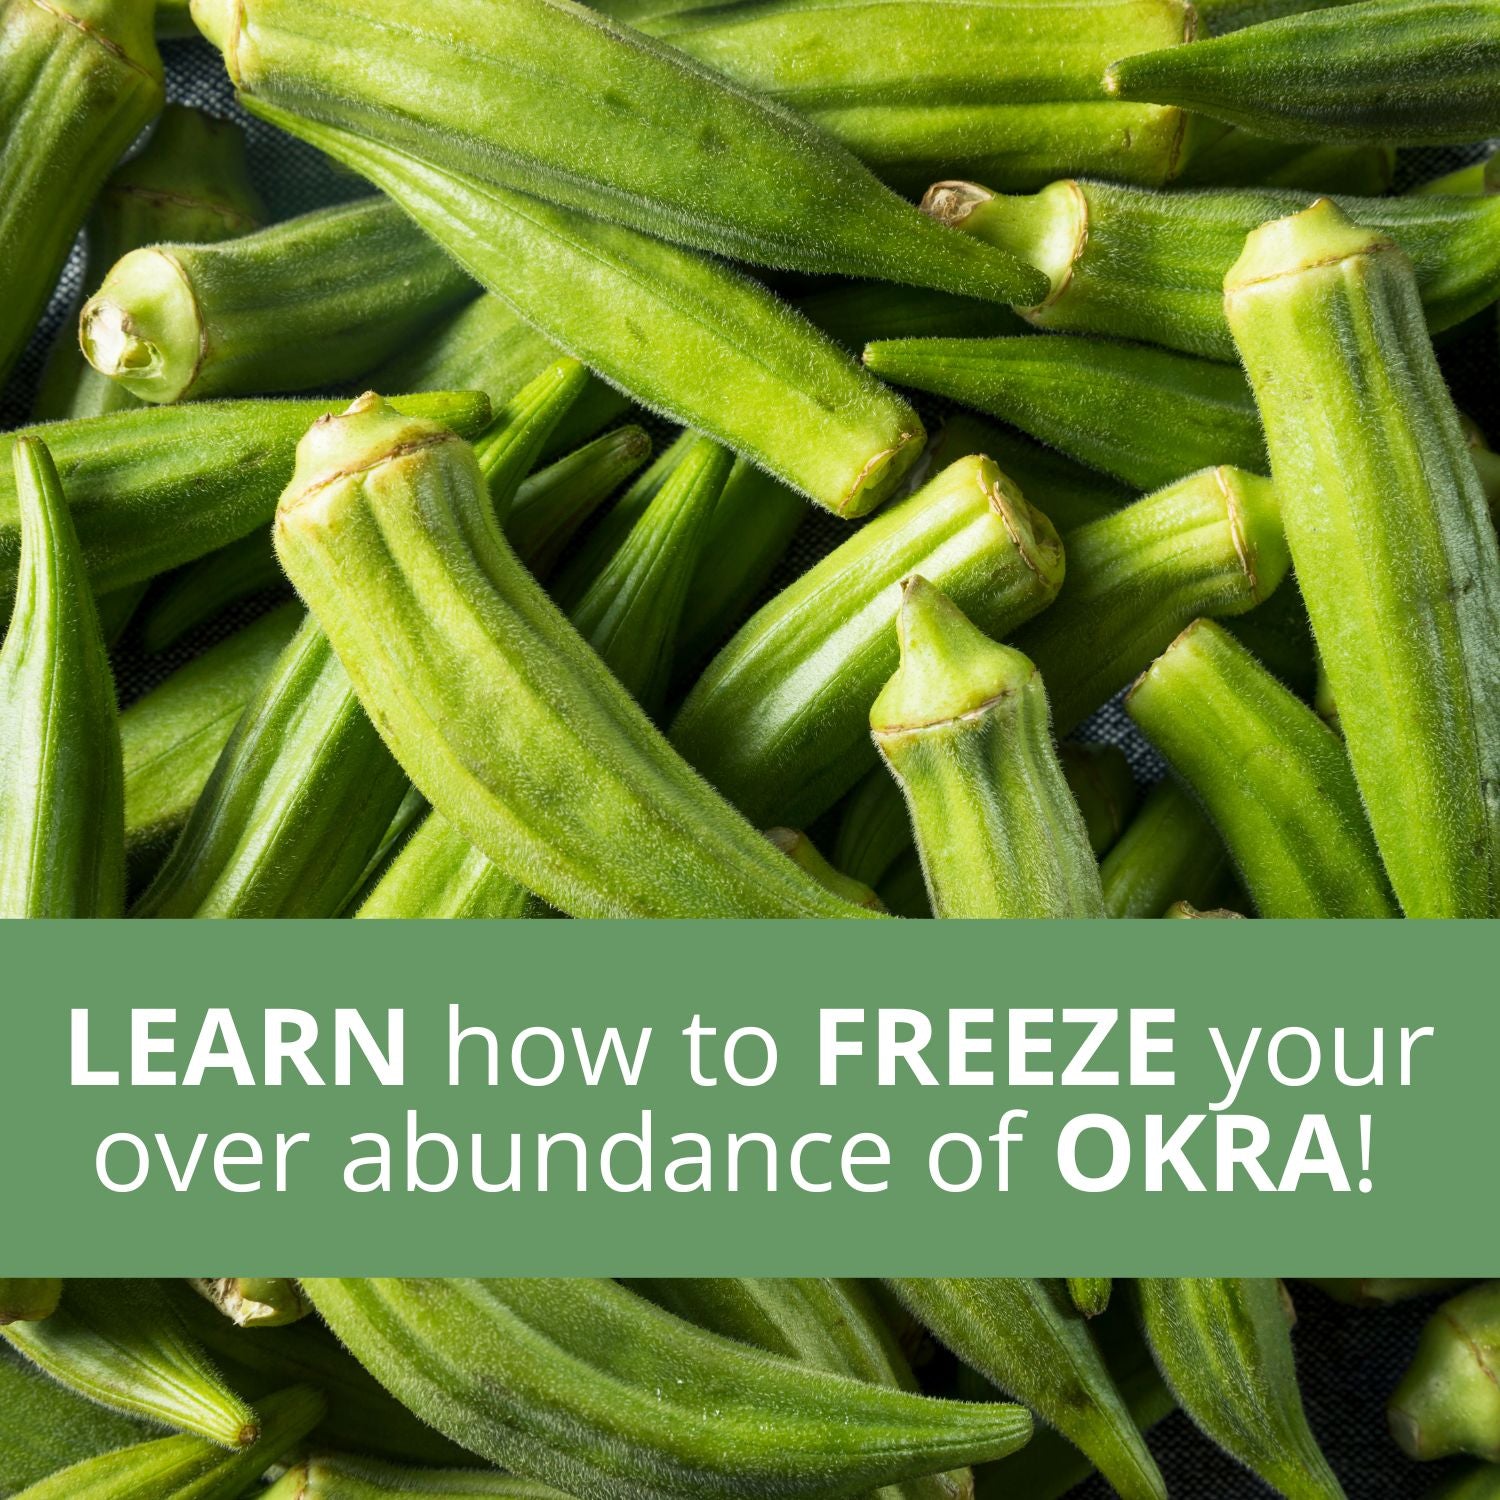 The Okra Harvest Notebook